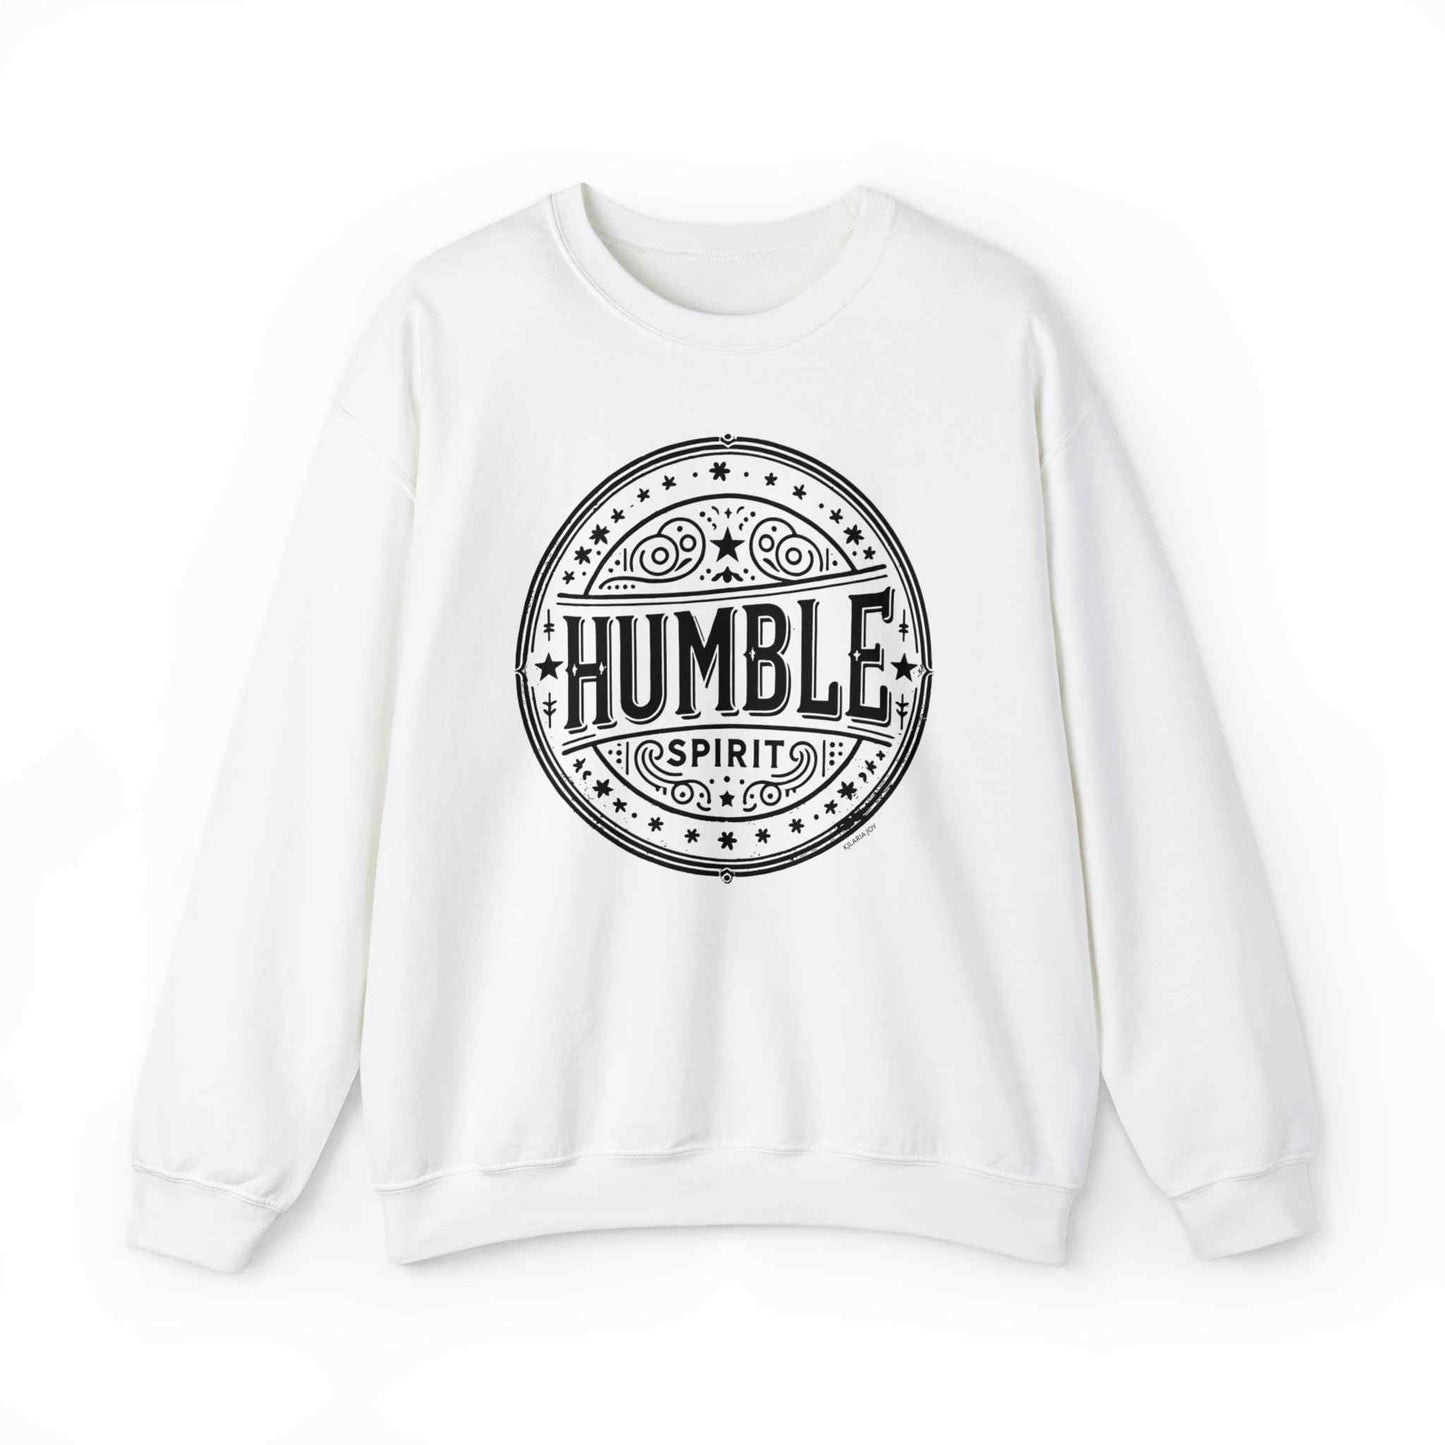 Humble Spirit Women's Classic Fit Sweatshirt